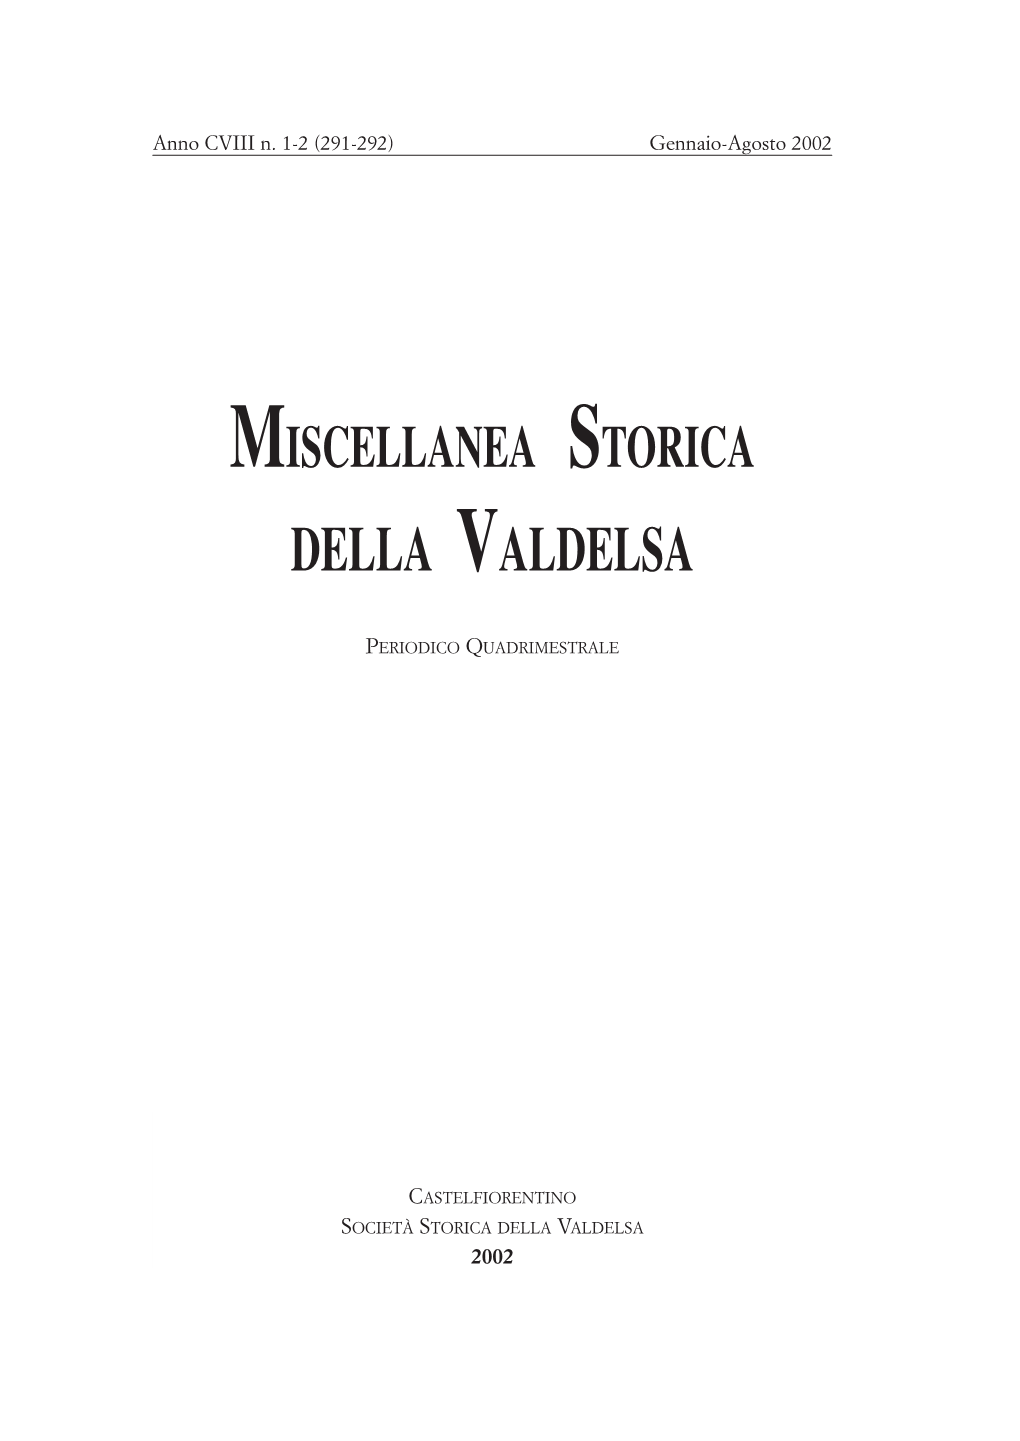 Miscellanea (N. 1-2/291)